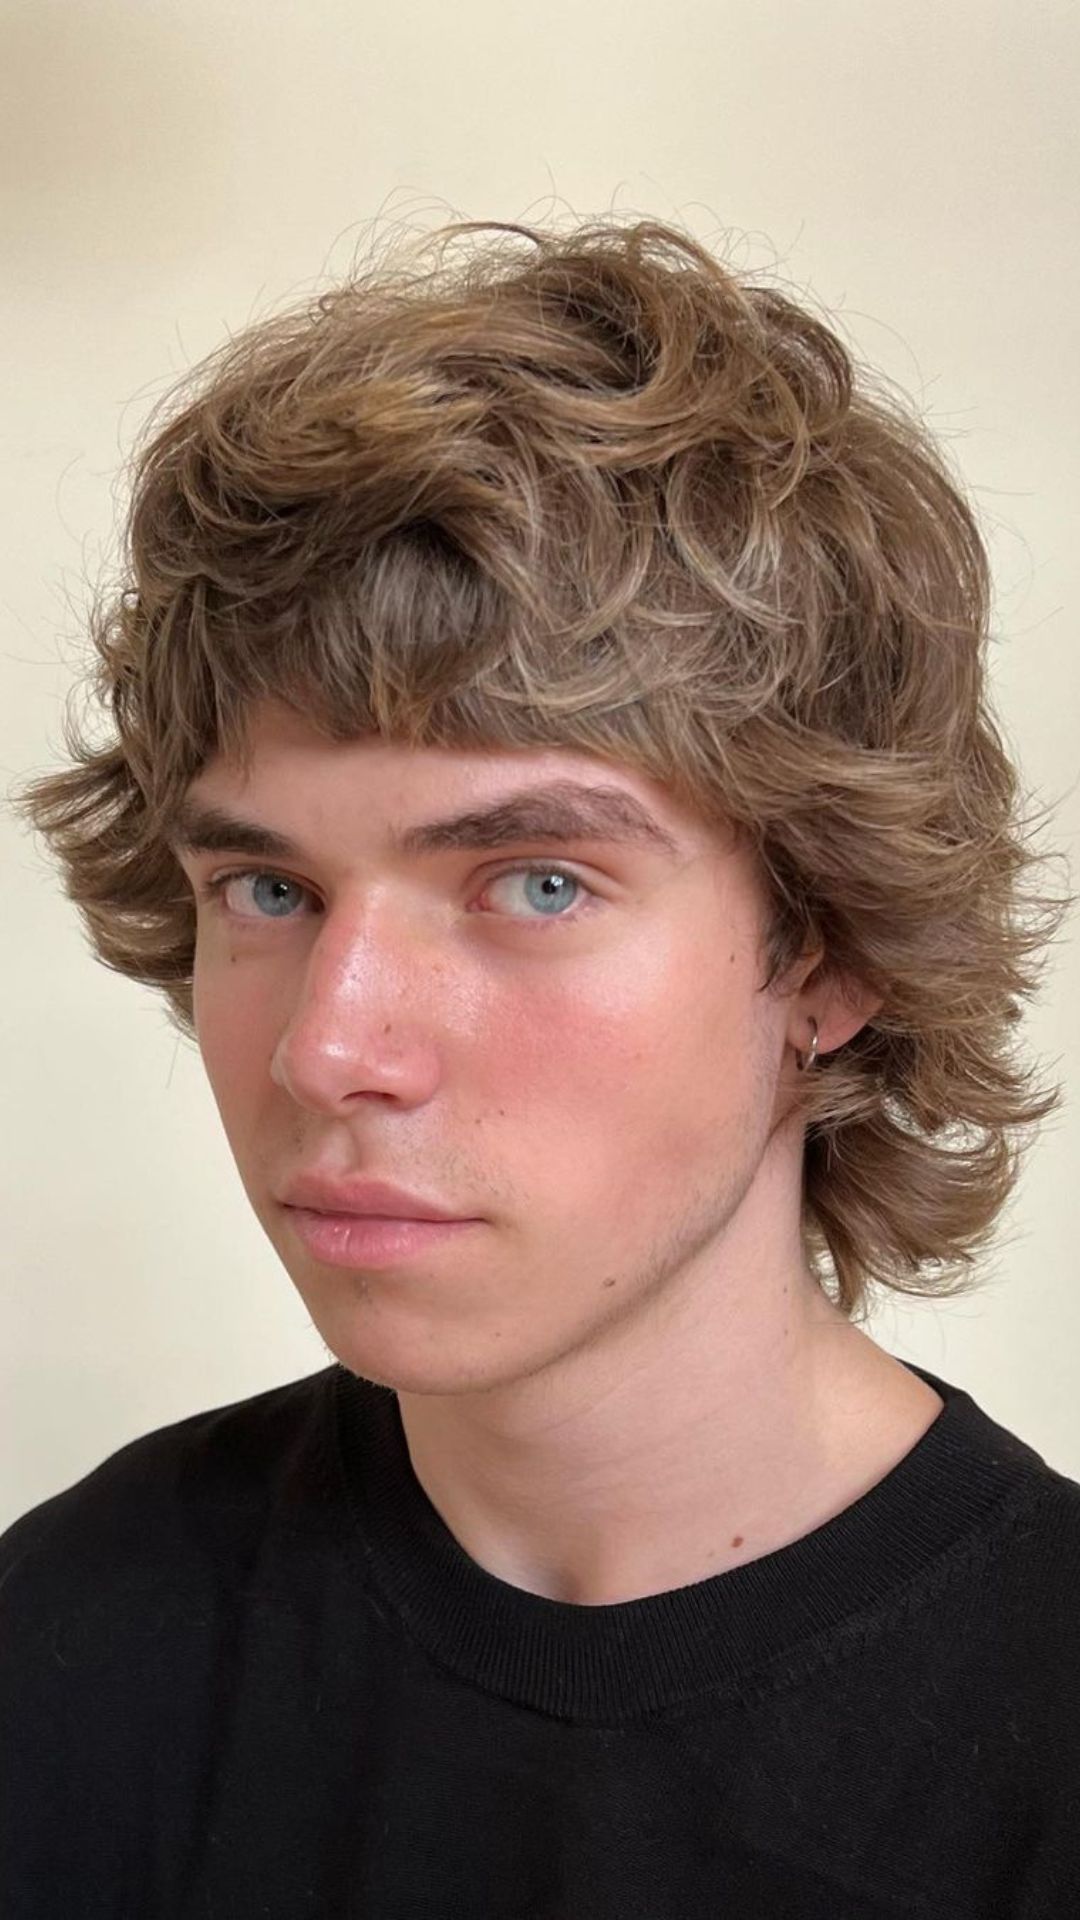 A teenage boy with shaggy layers.